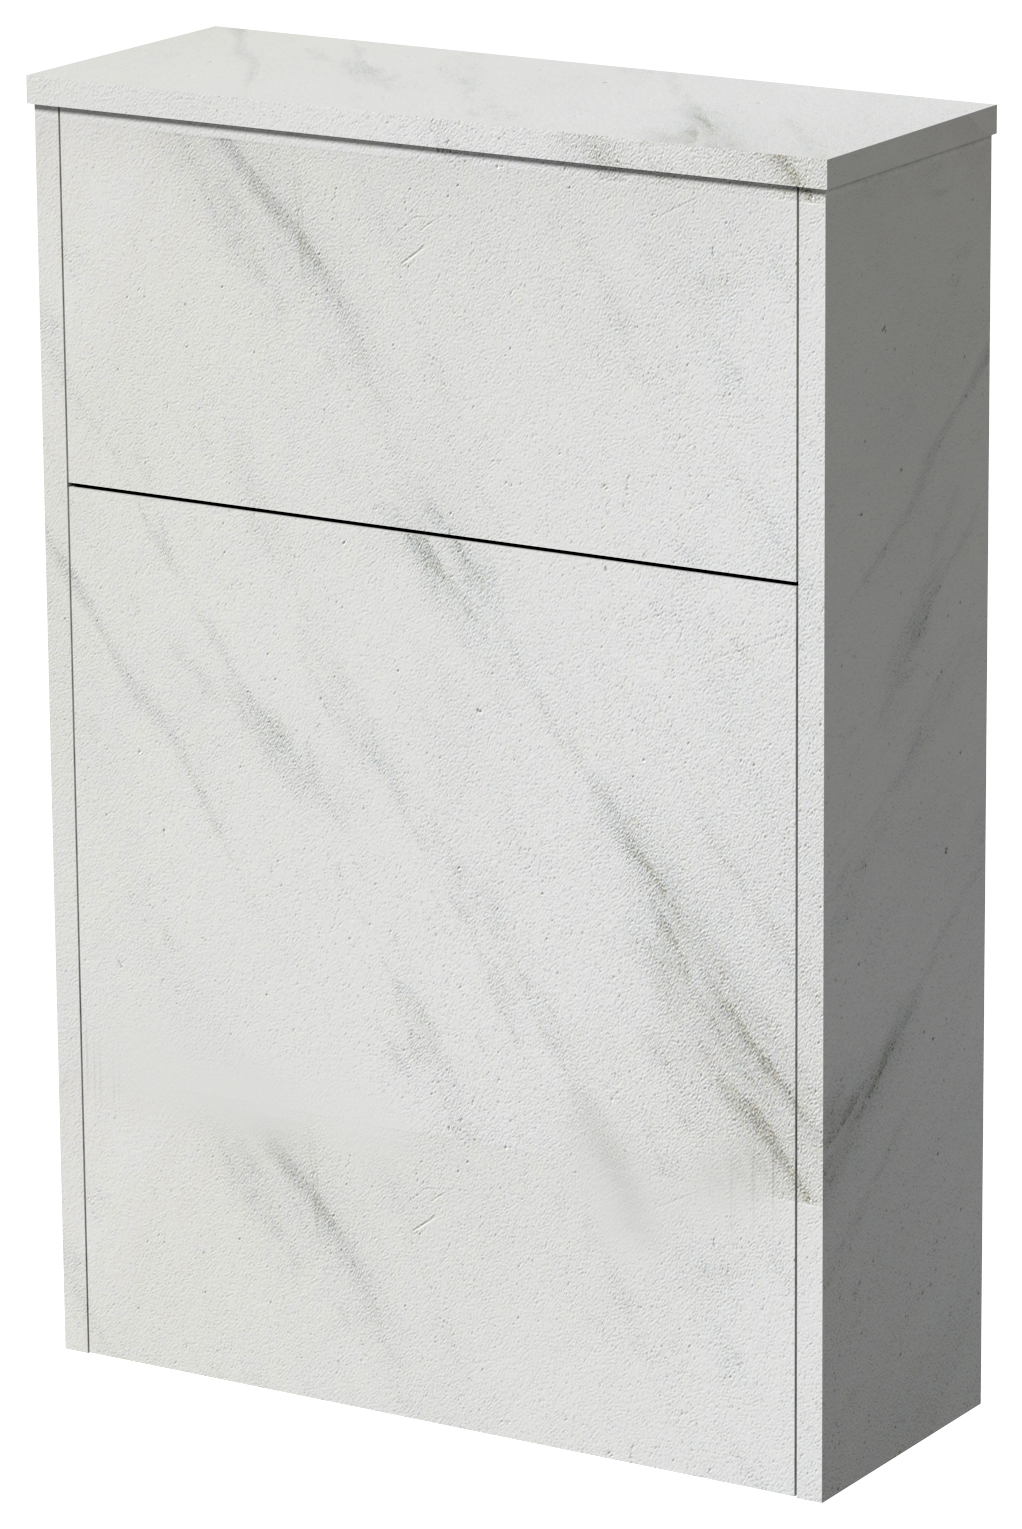 Image of Wickes Tallinn White Marble Toilet Unit - 890 x 600mm